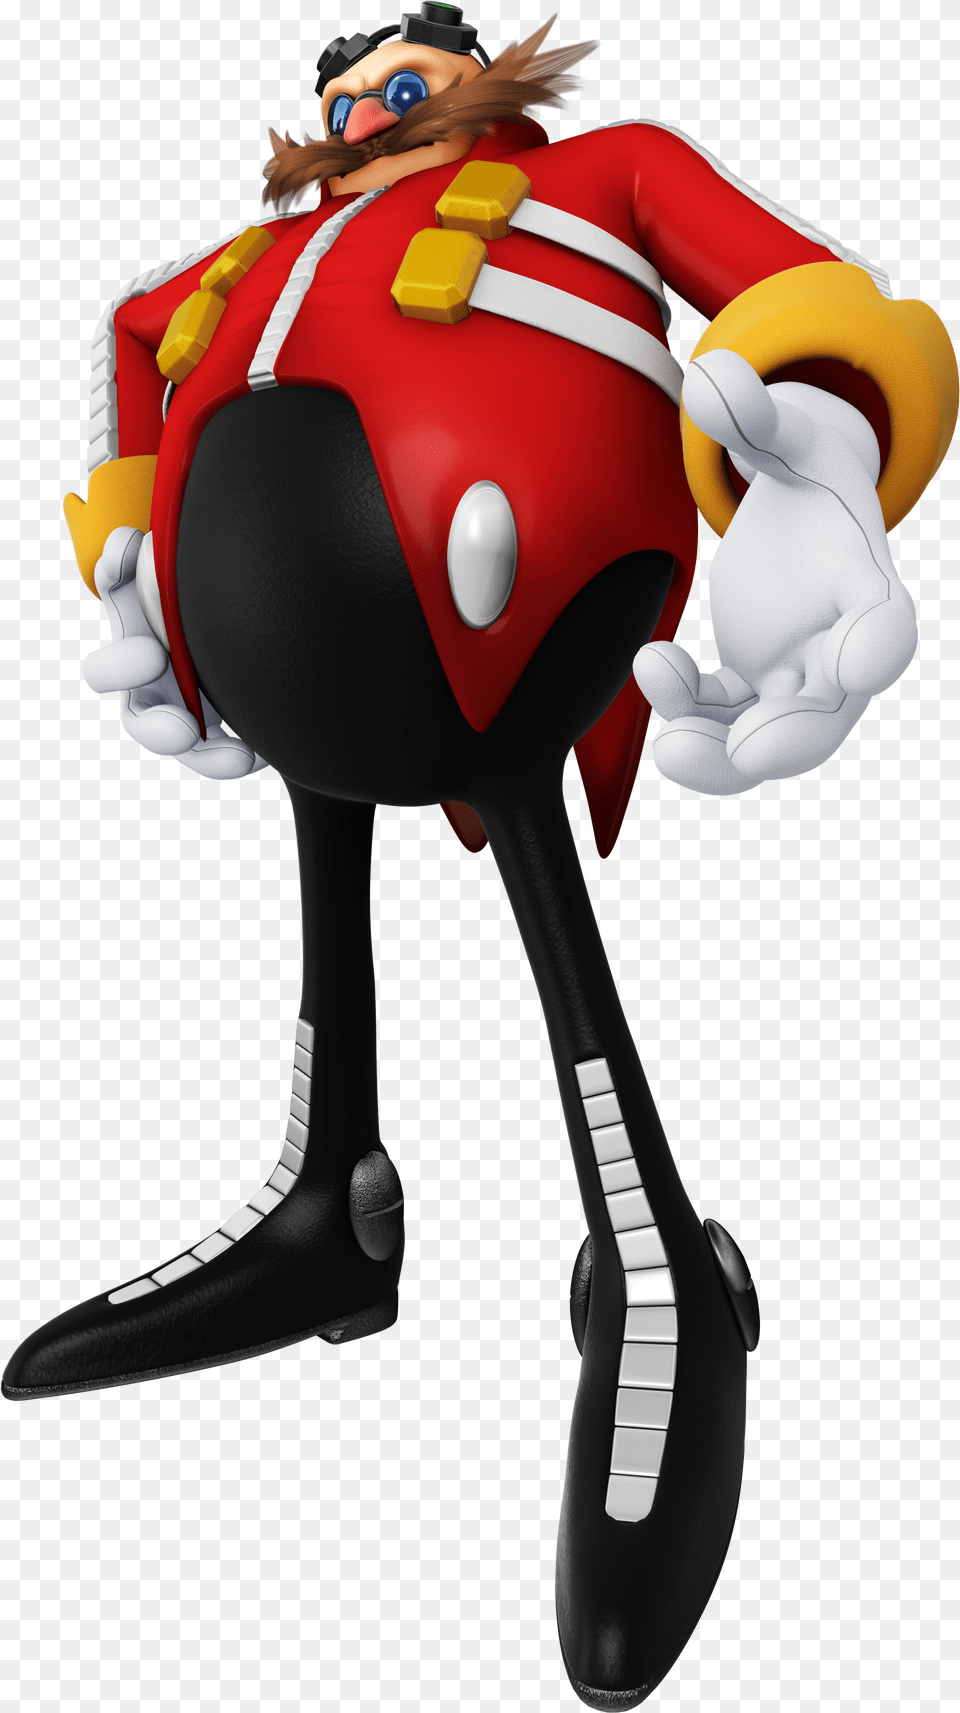 Robotnik In Sonic The Hedgehog Doctor Eggman Sonic The Hedgehog, Person, Electronics, Hardware Png Image